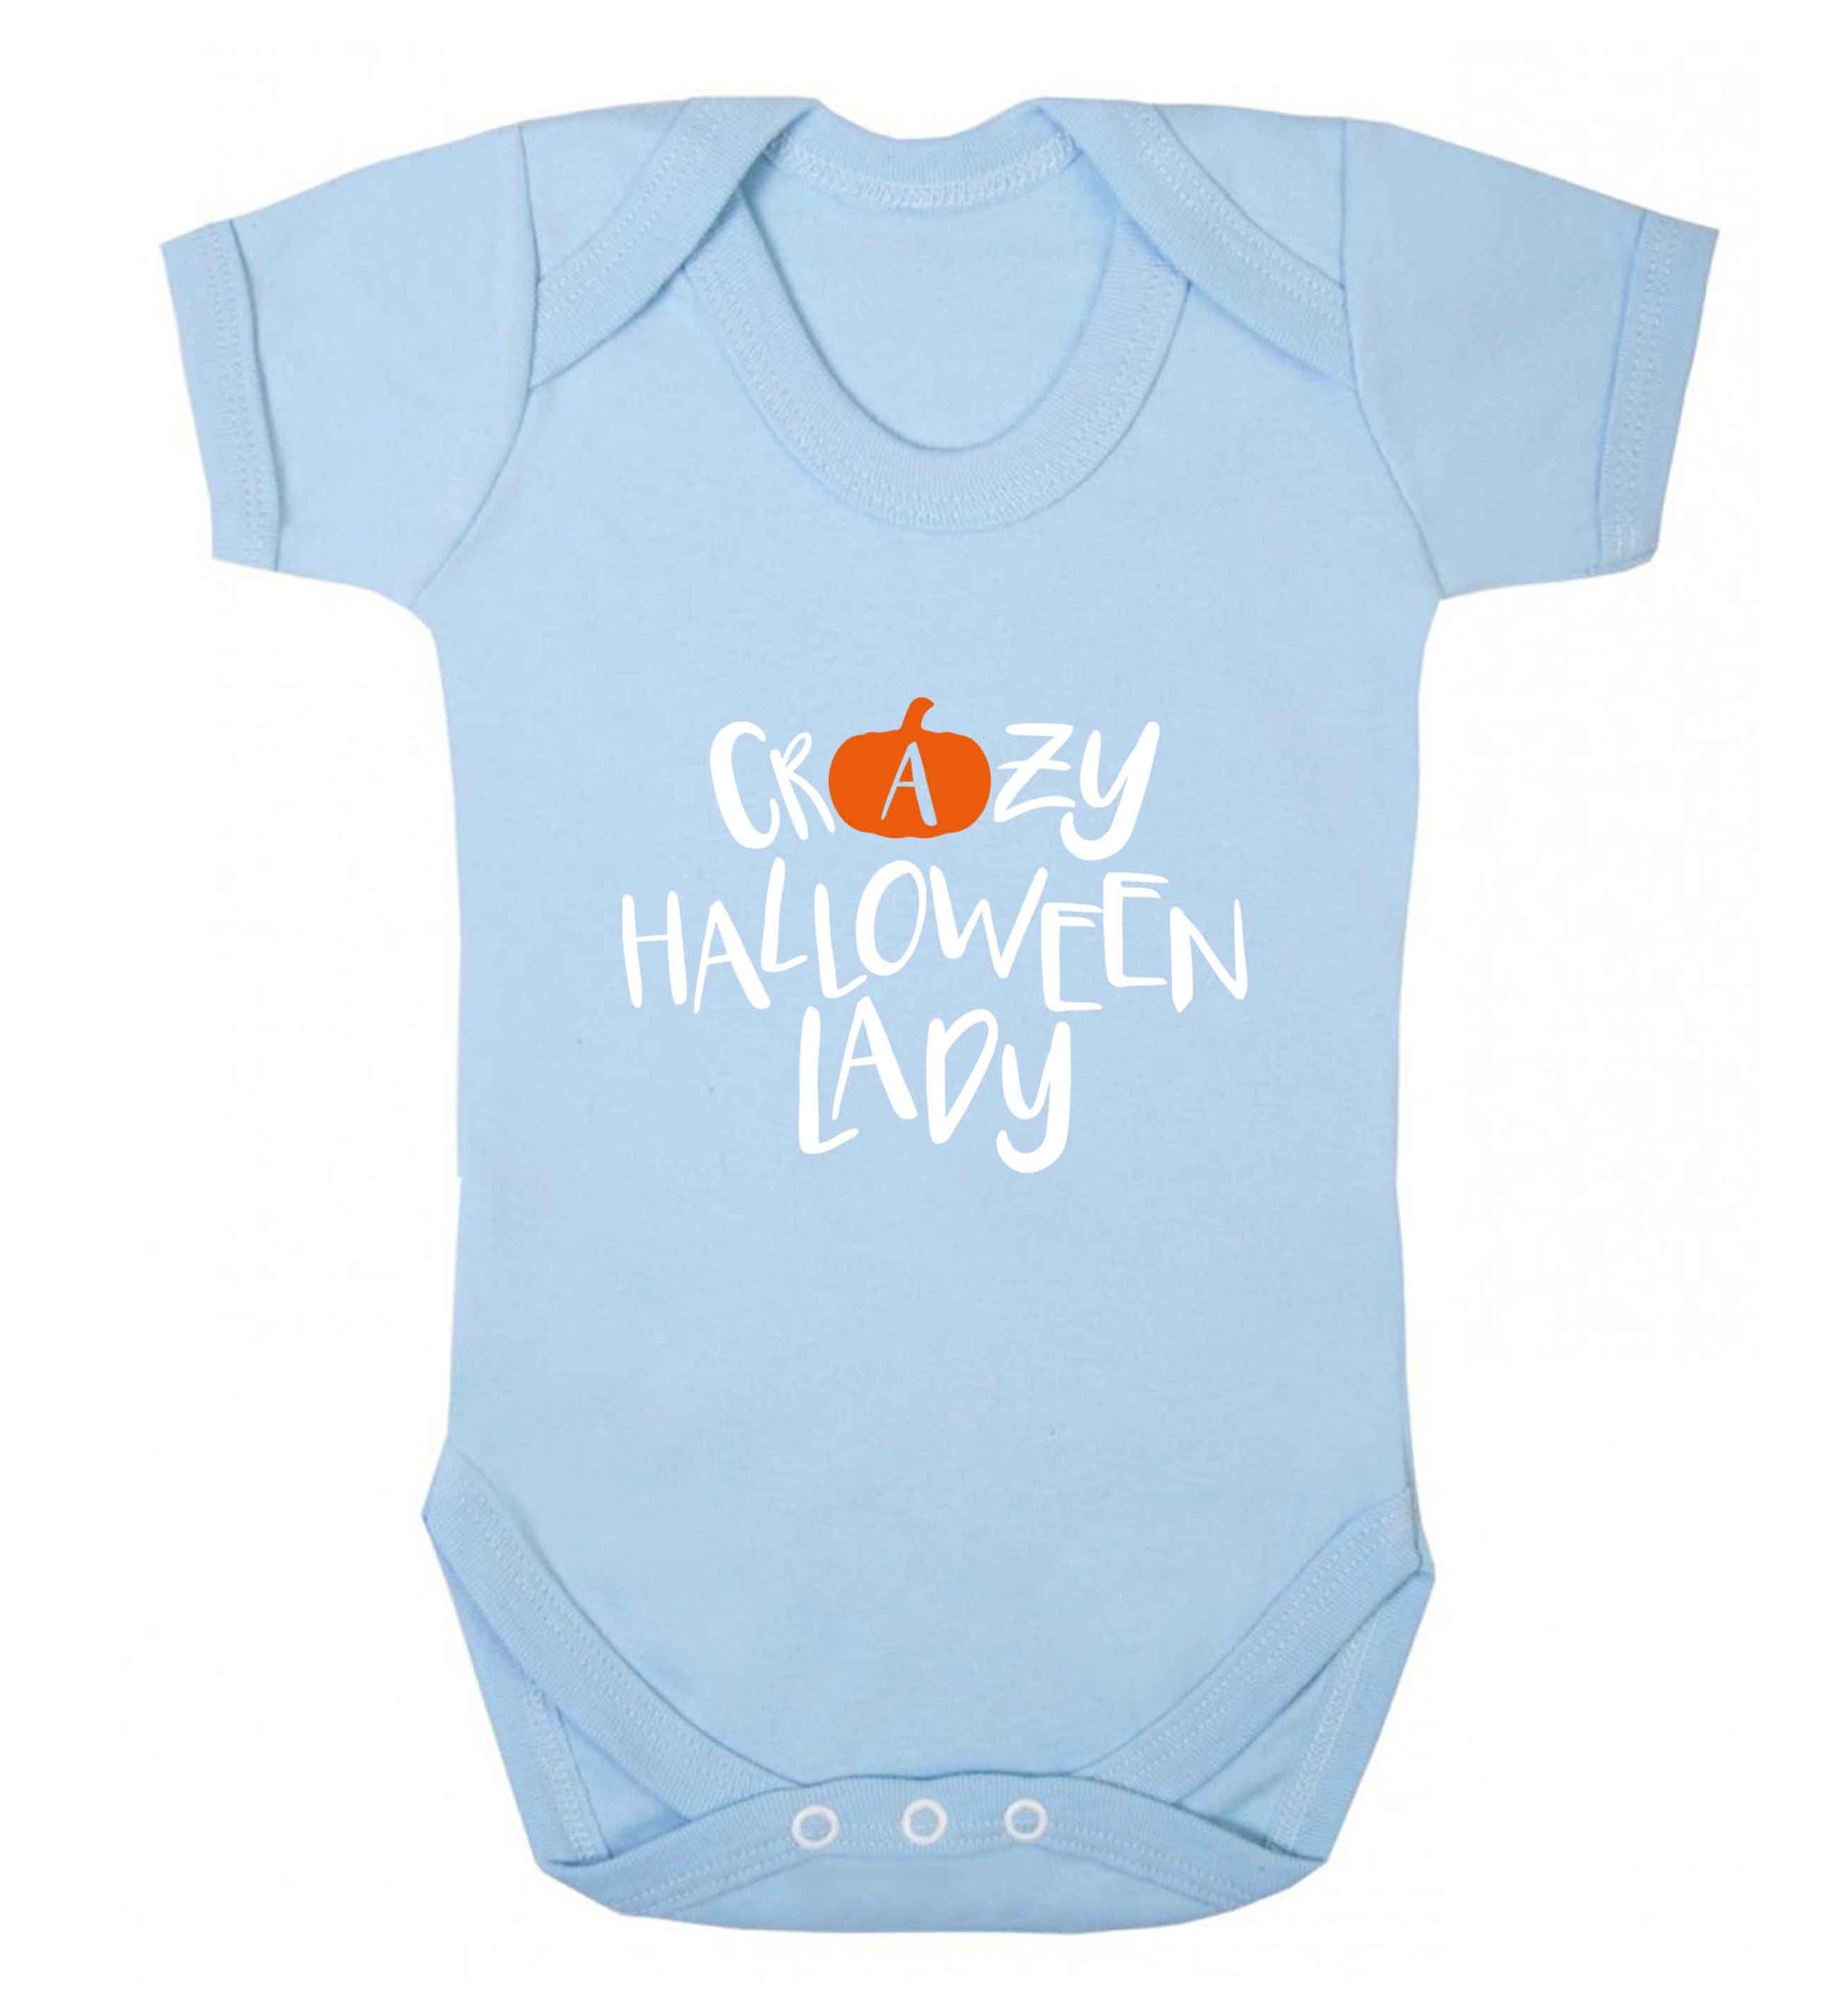 Crazy halloween lady baby vest pale blue 18-24 months